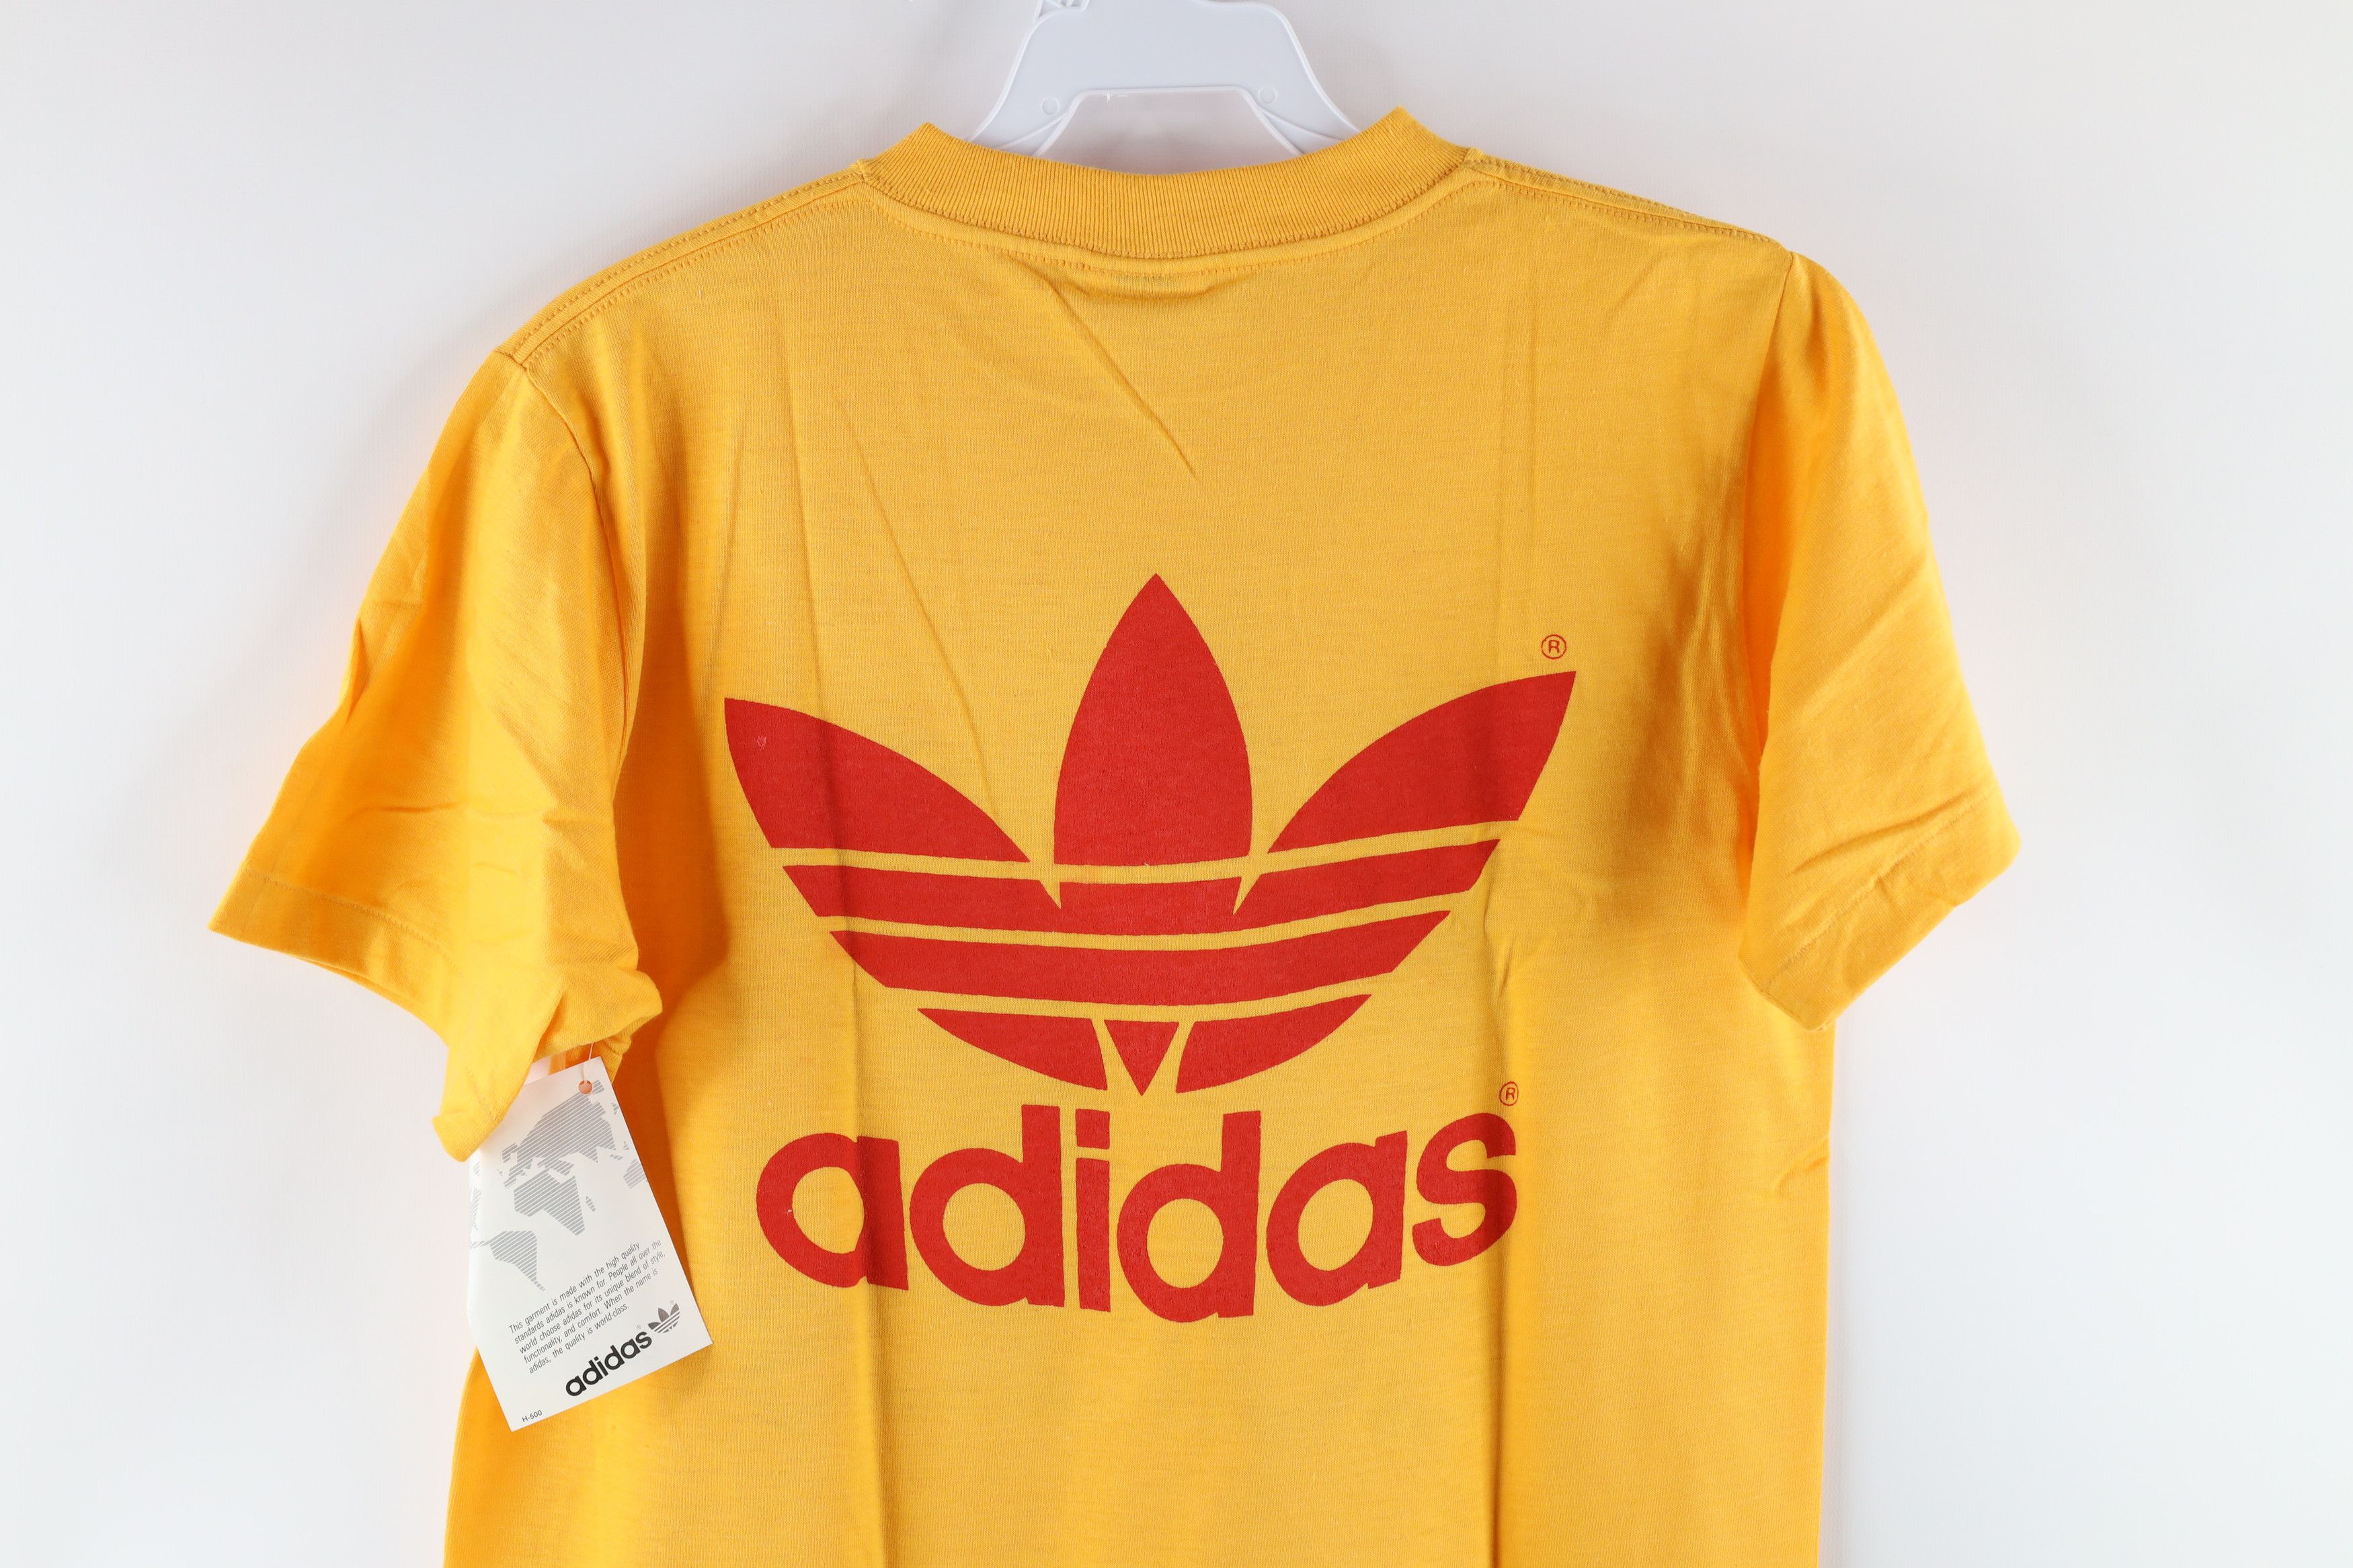 Adidas NOS Vintage 80s Adidas Trefoil 1988 Olympics T-Shirt Yellow Size US S / EU 44-46 / 1 - 8 Thumbnail